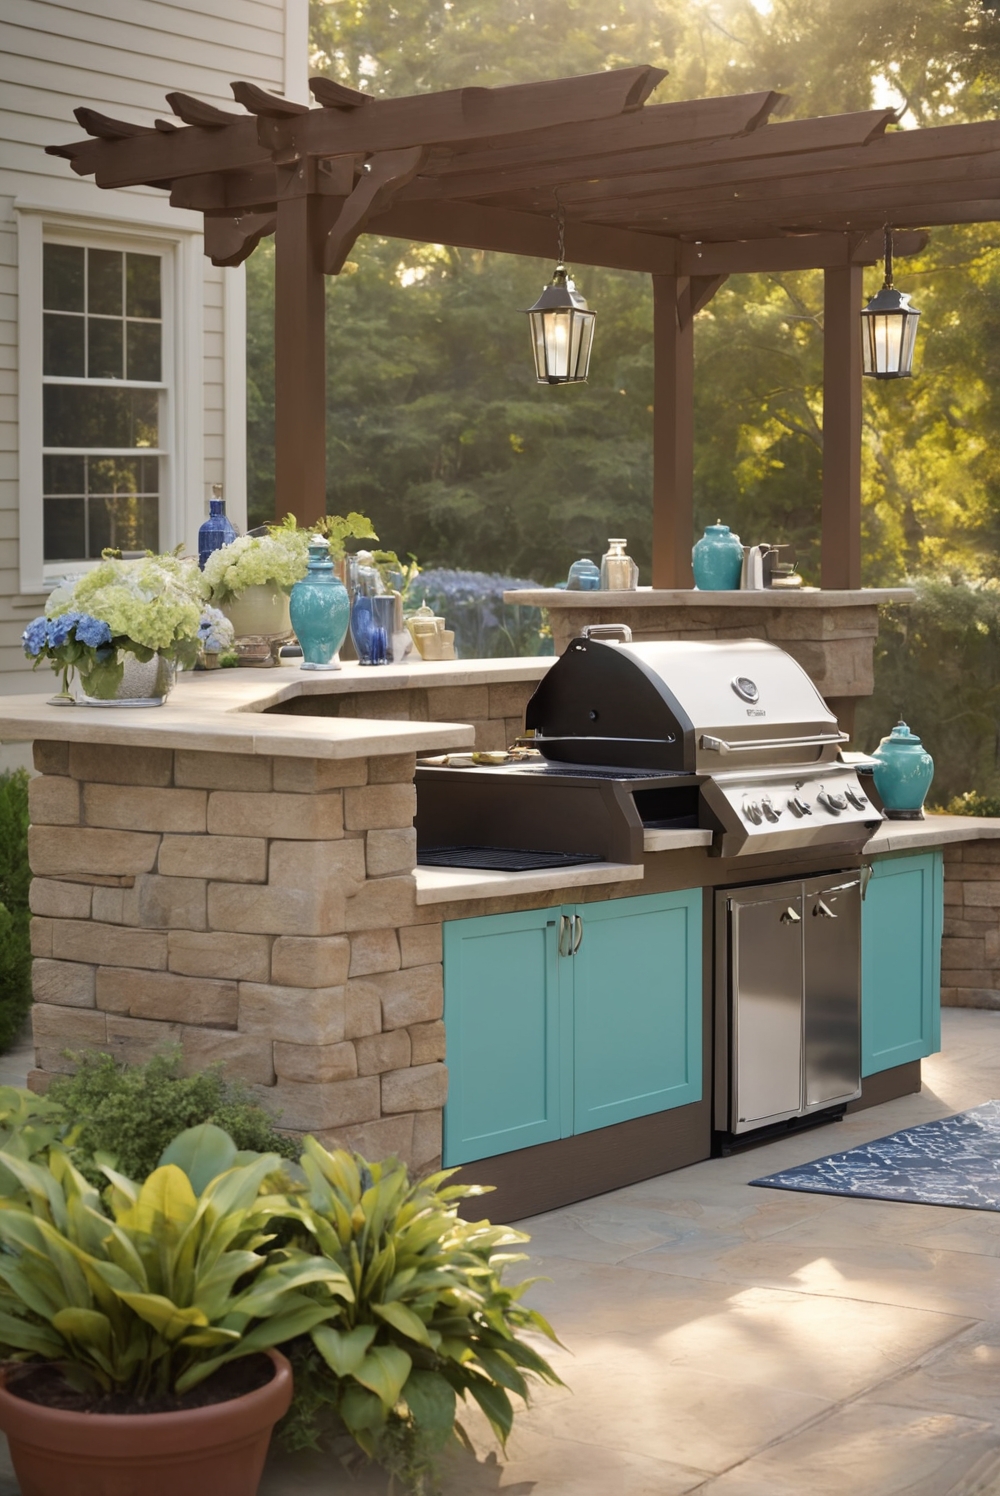 outdoor kitchen design, color coordination, interior design elements, outdoor living space, stylish decor